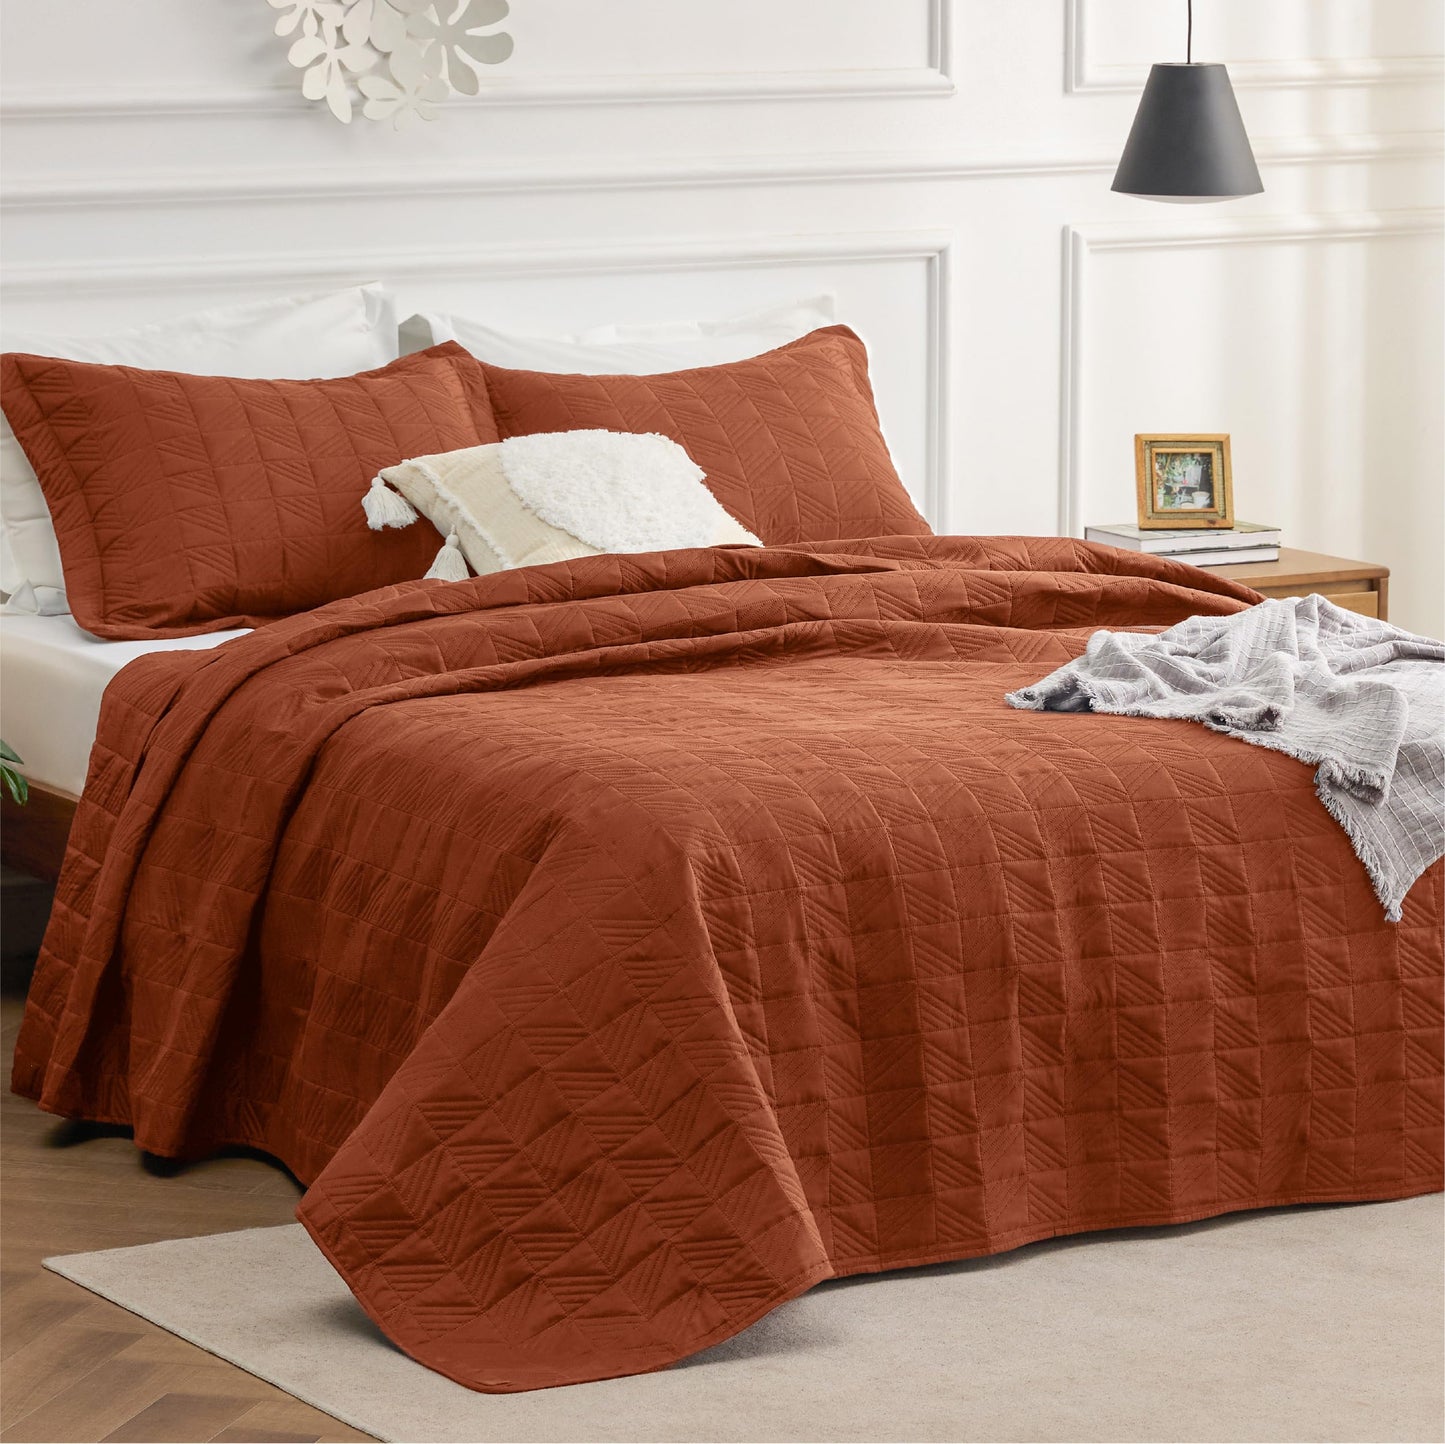 Bedsure Queen Quilt Bedding Set - Soft Ultrasonic Full/Queen Quilt Set - Geometric Bedspread Queen Size - Lightweight Bedding Coverlet for All Seasons (Includes 1 Red Orange Quilt, 2 Pillow Shams)